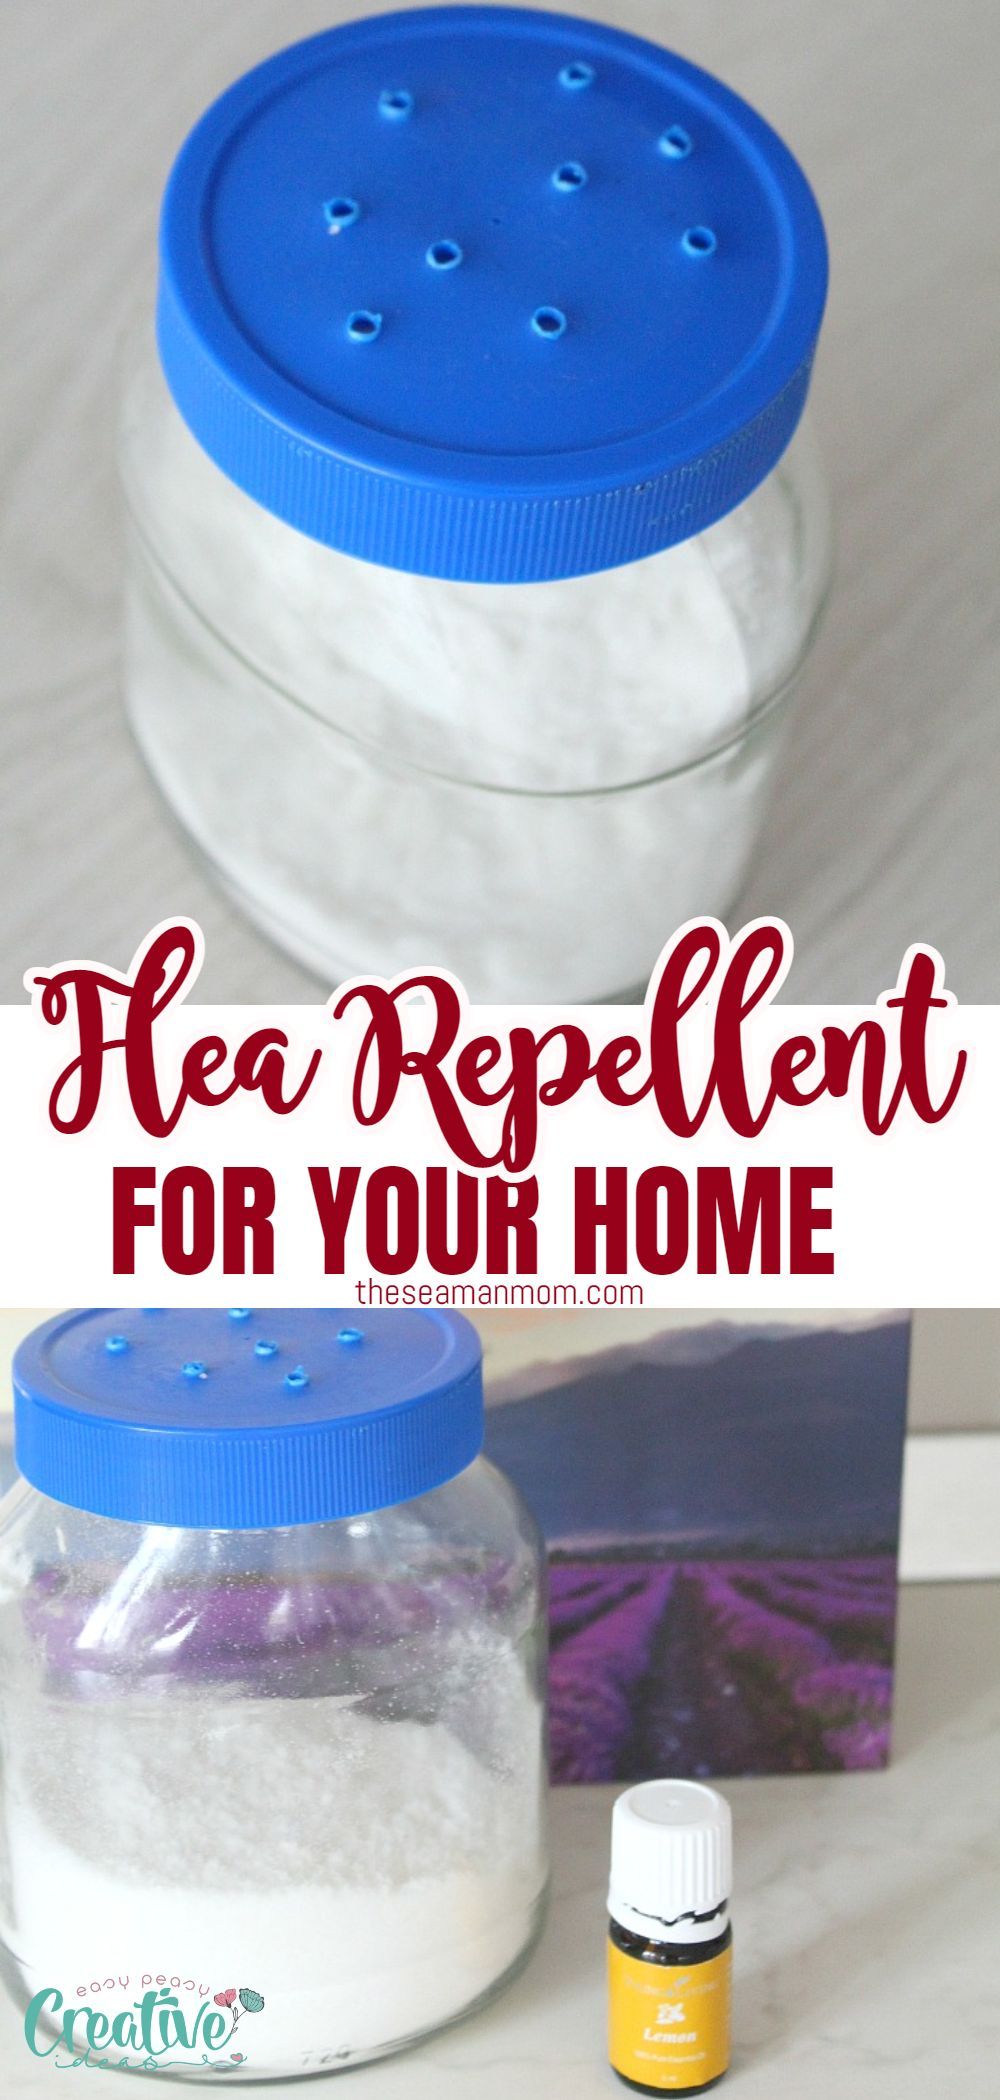 DIY Flea repellent for home